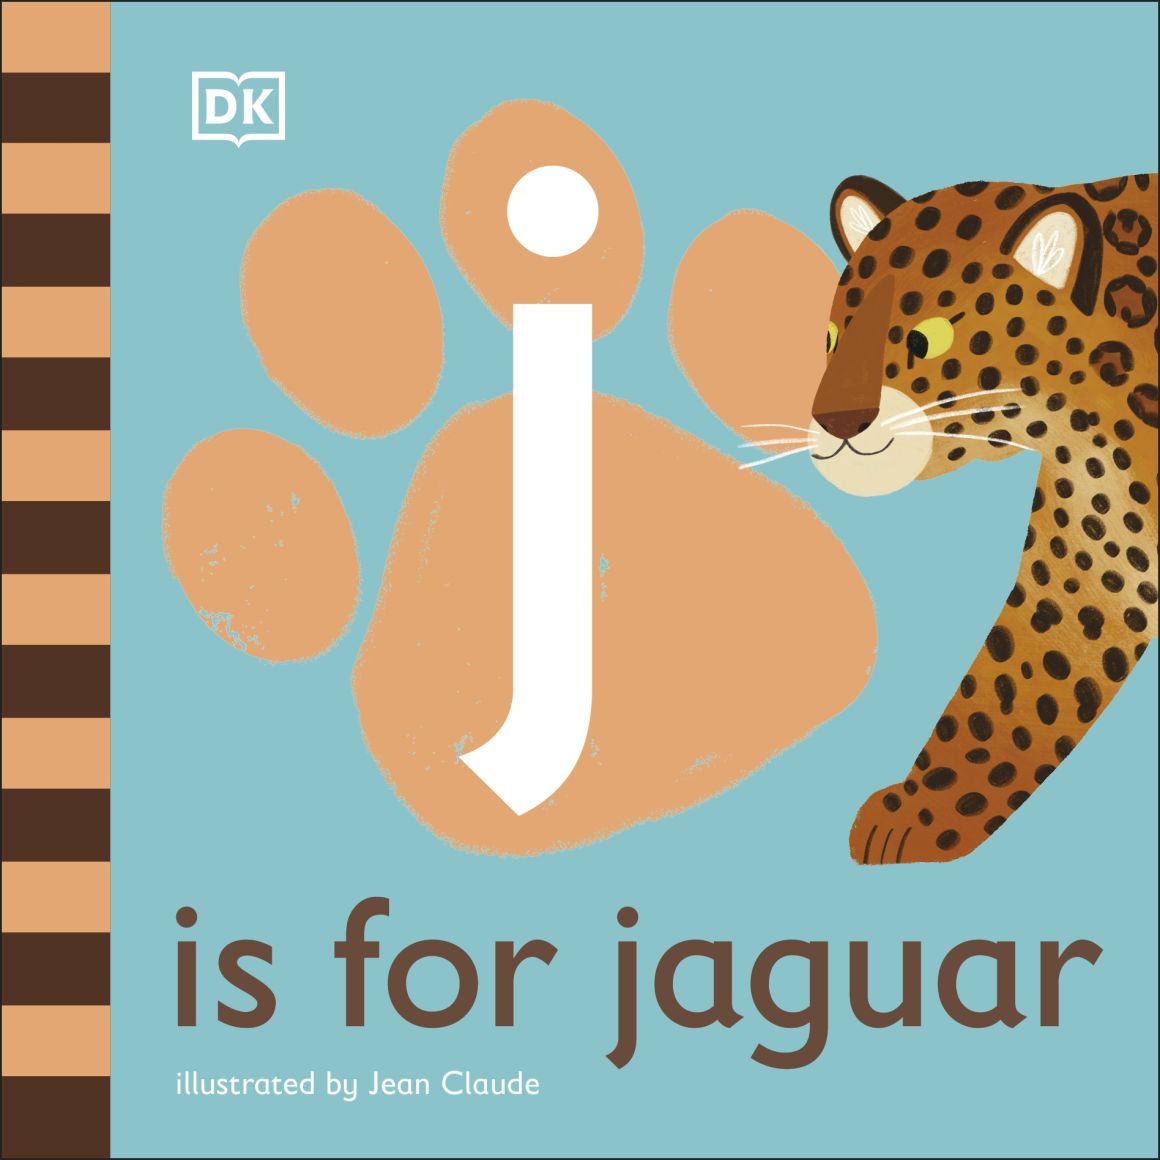 DK Alphabet series: j is for jaguar